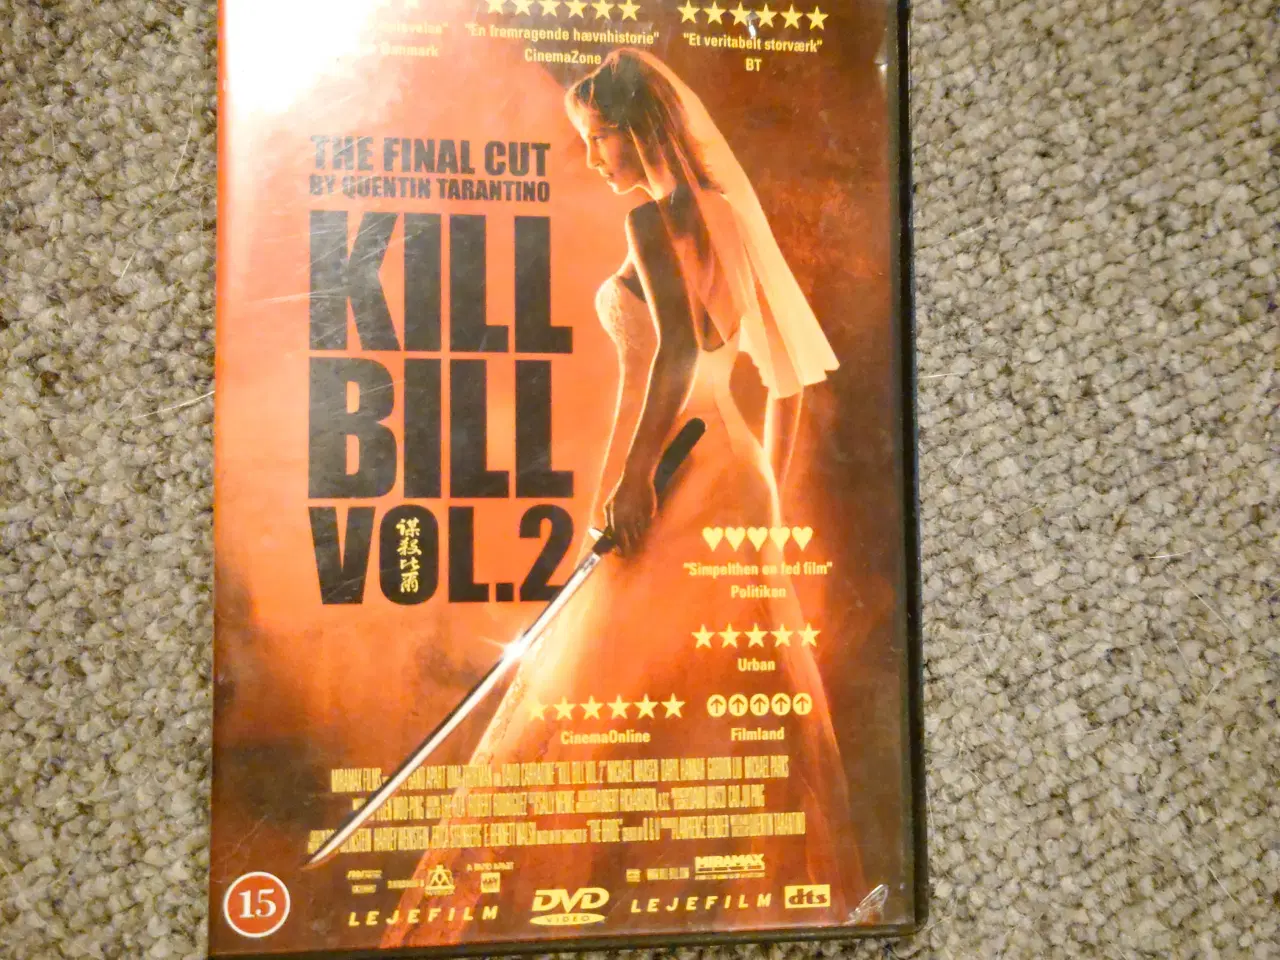 Billede 1 - Kill Bill vol 2 